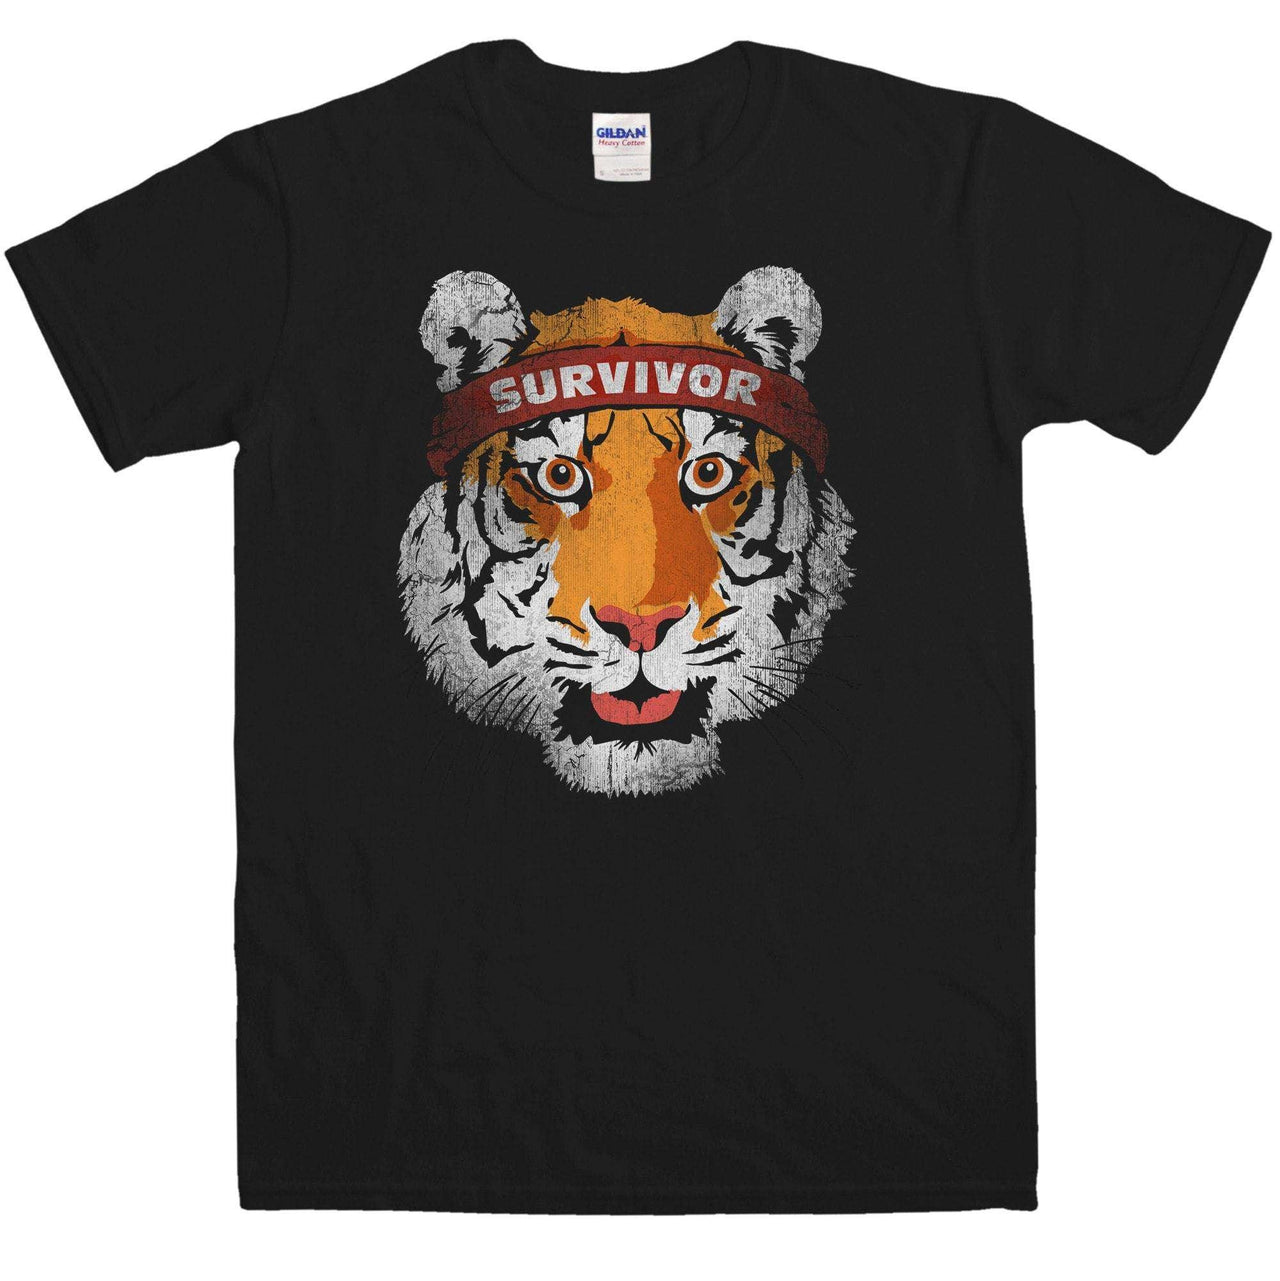 Tiger Survivor Mens Graphic T-Shirt 8Ball